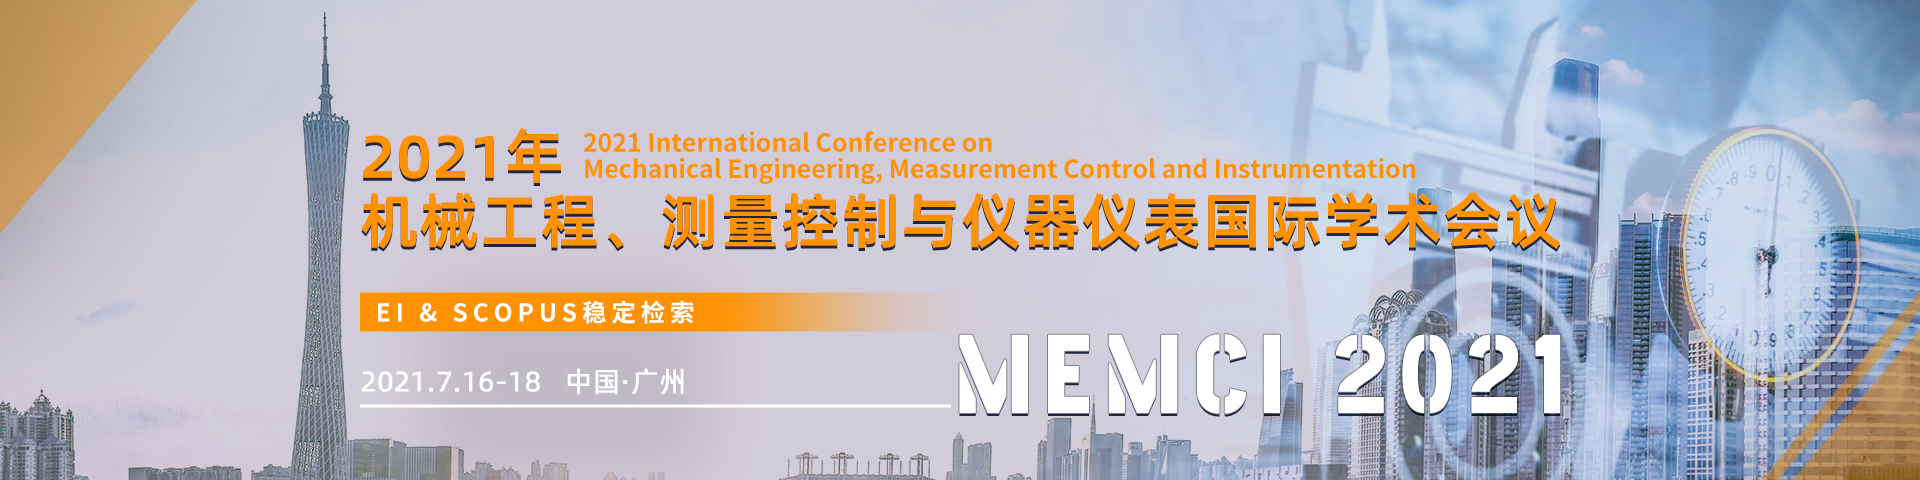 7月广州-MEMCI2021-banner中-何霞丽-20210228.jpg